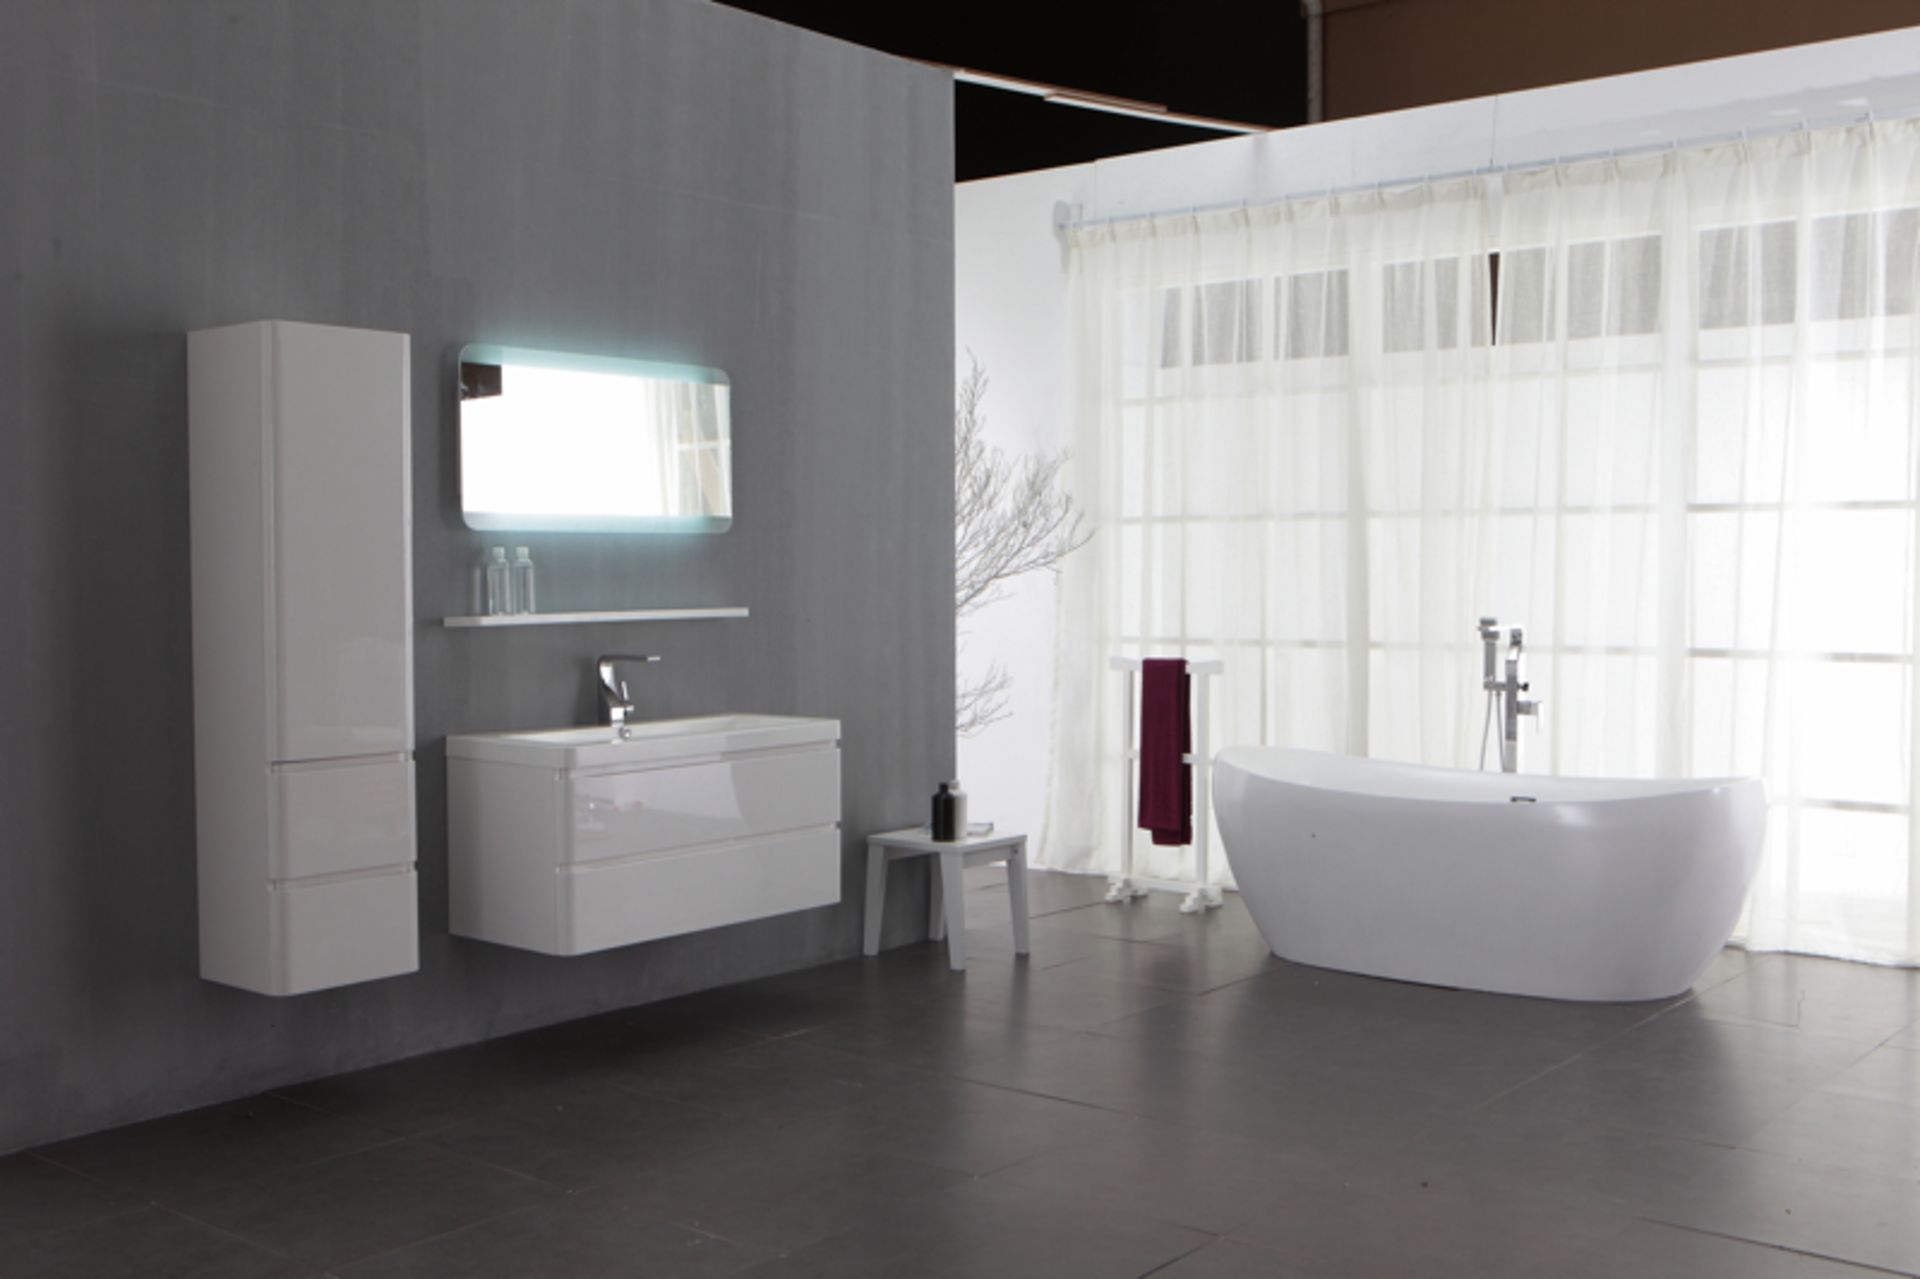 1 x Austin Bathrooms URBAN 60 Wall Mounted Bathroom Vanity Unit With MarbleTECH Basin - RRP £690 - Image 6 of 6